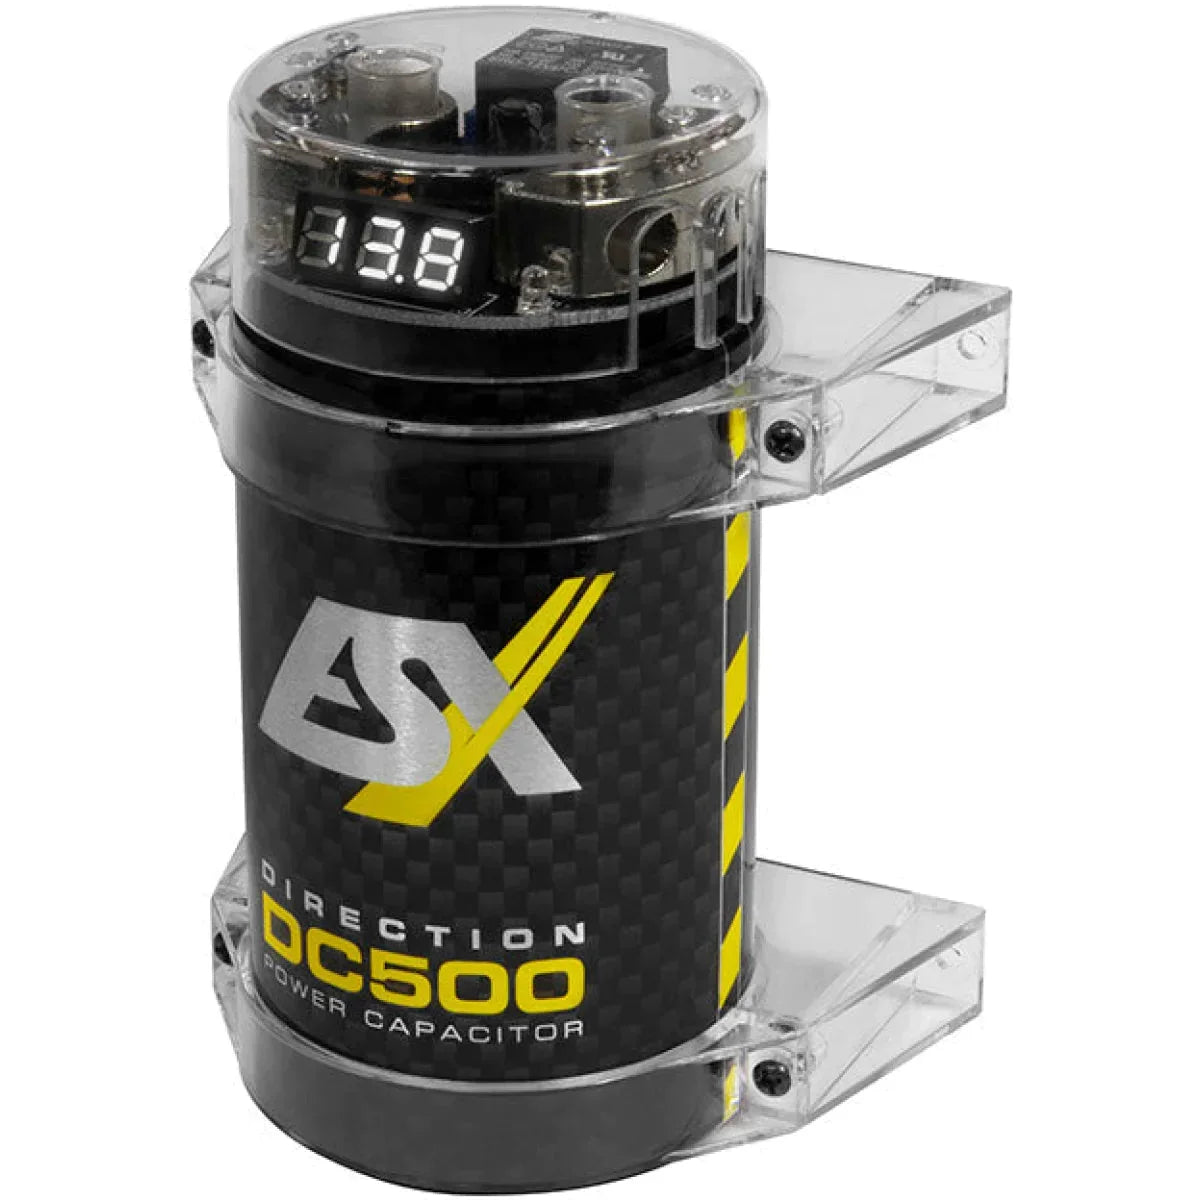 ESX ESX FaradKondensator - 0,5 Direction DC500 Kondensator